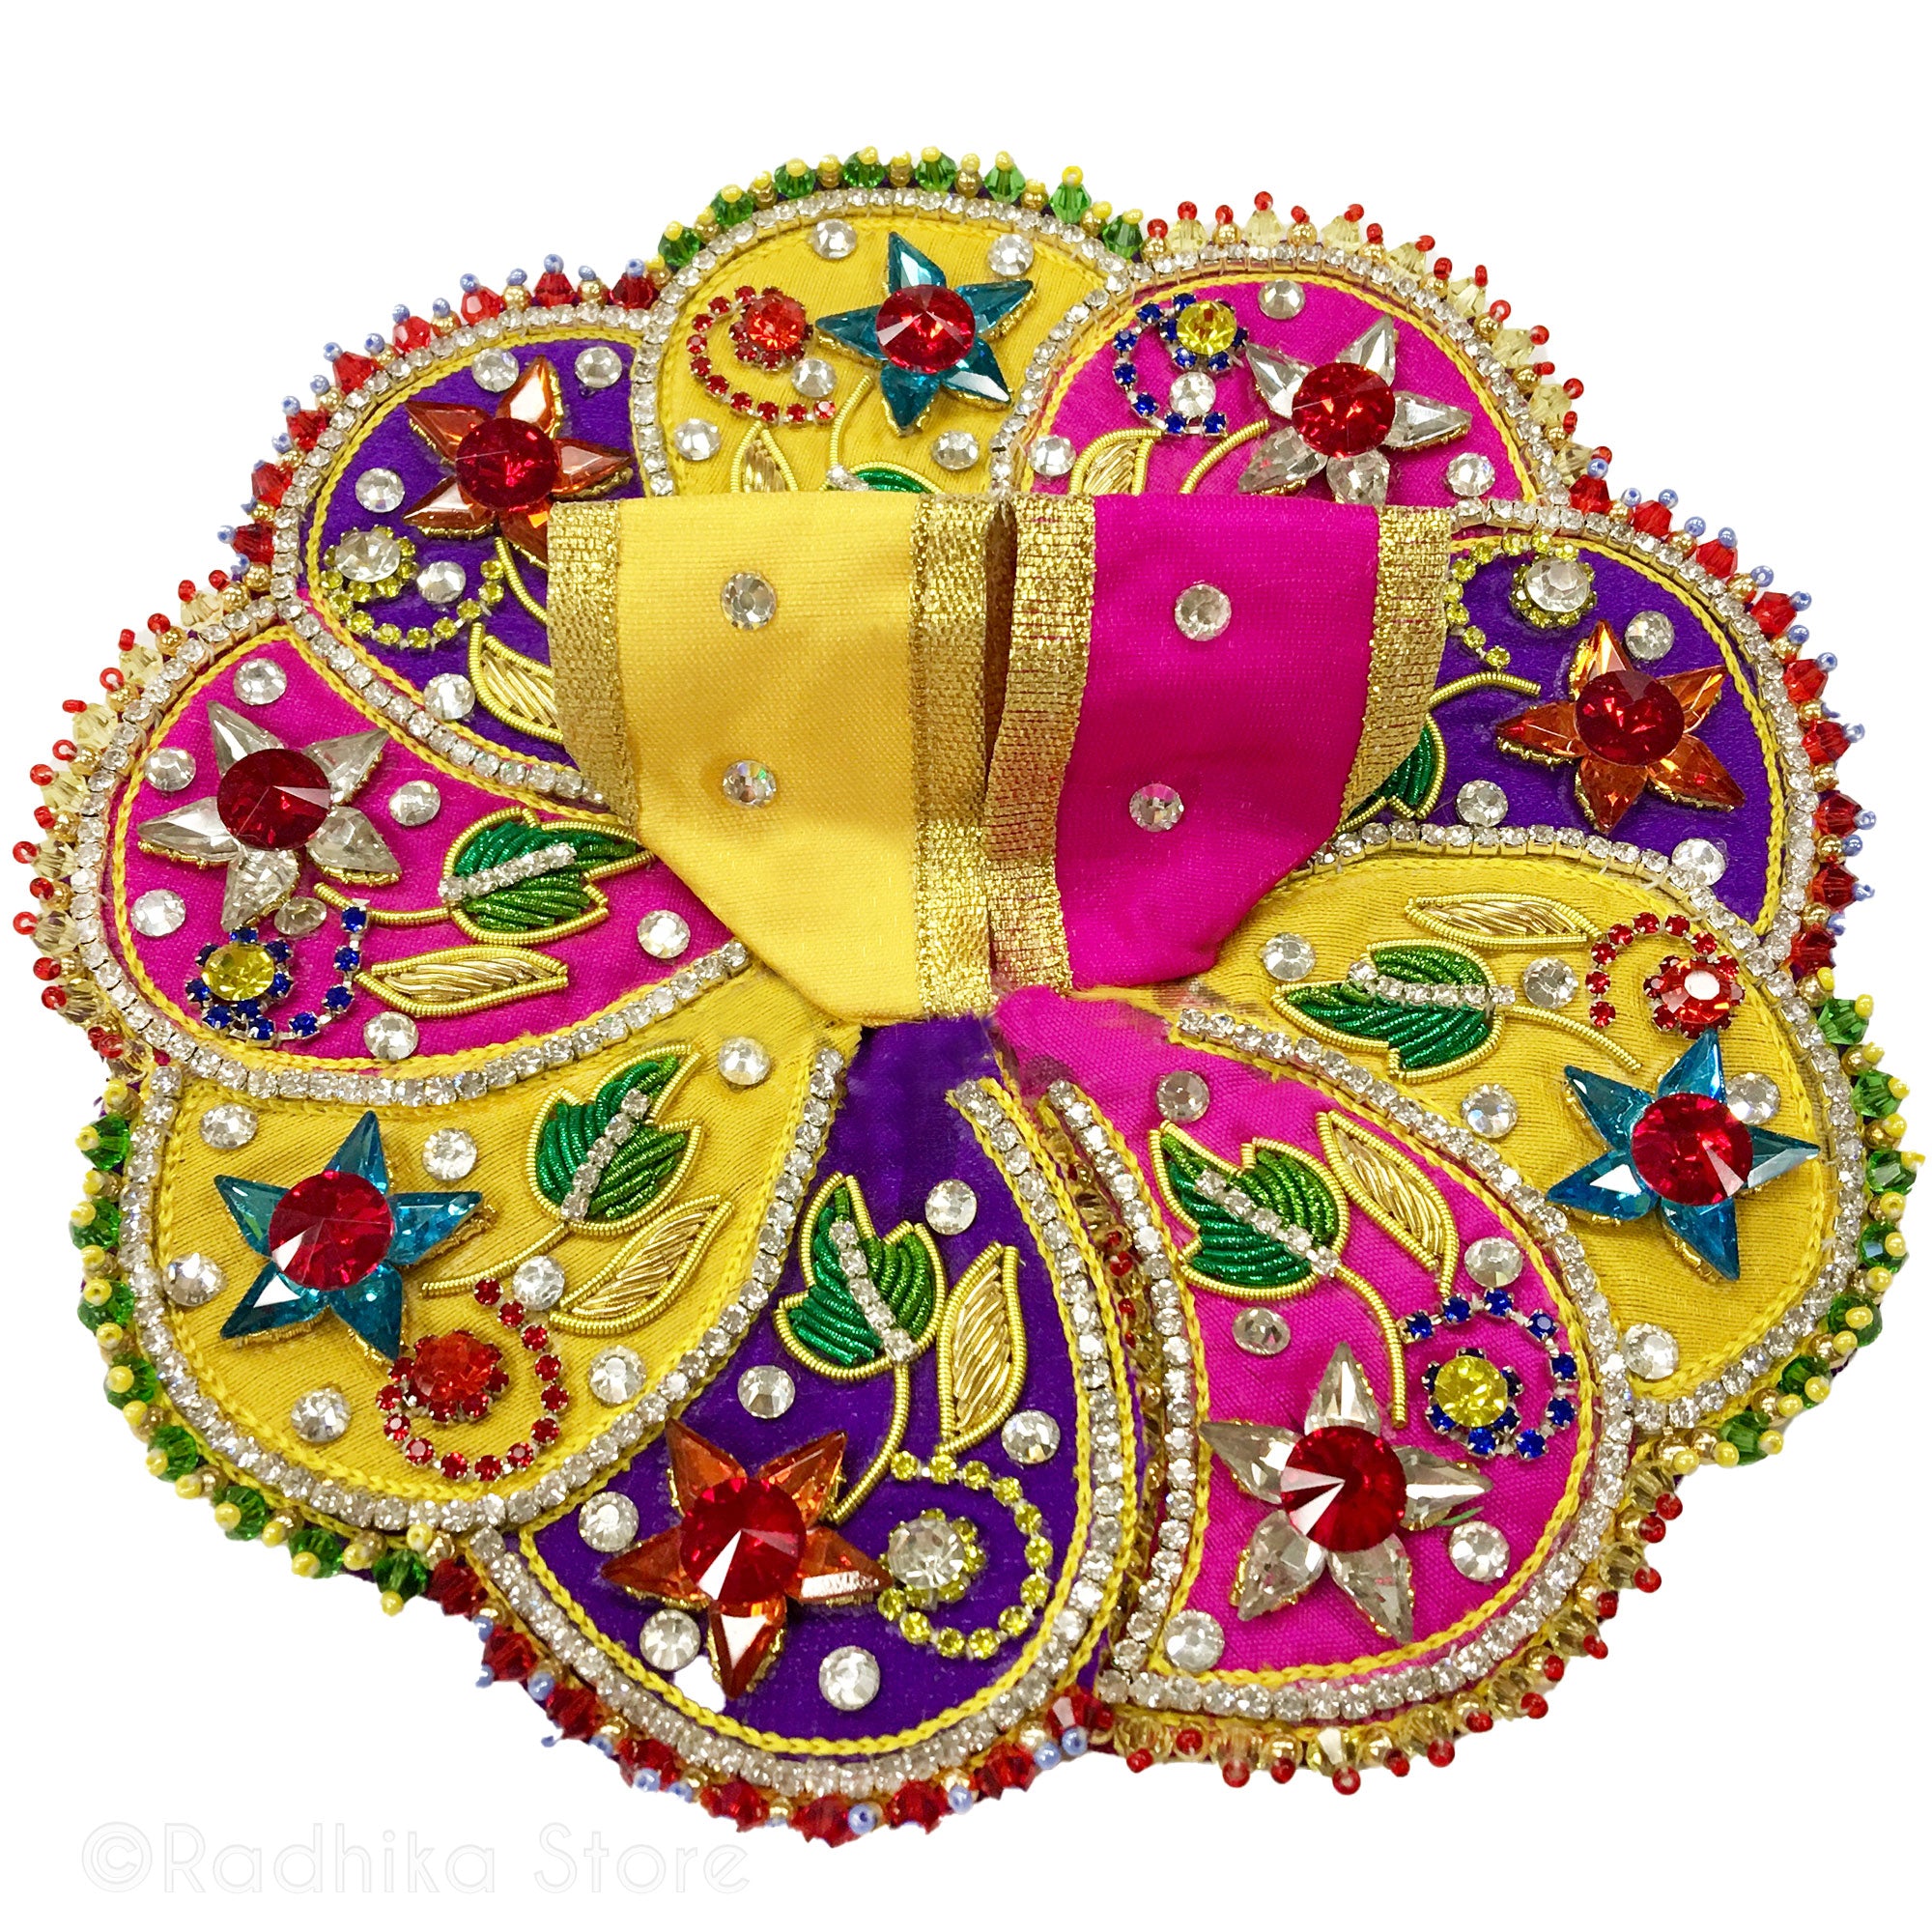 Vrindavan Star Flowers- Laddu Gopal Outfit - 1" - 3" and 4" Inch Laddu Gopal Size